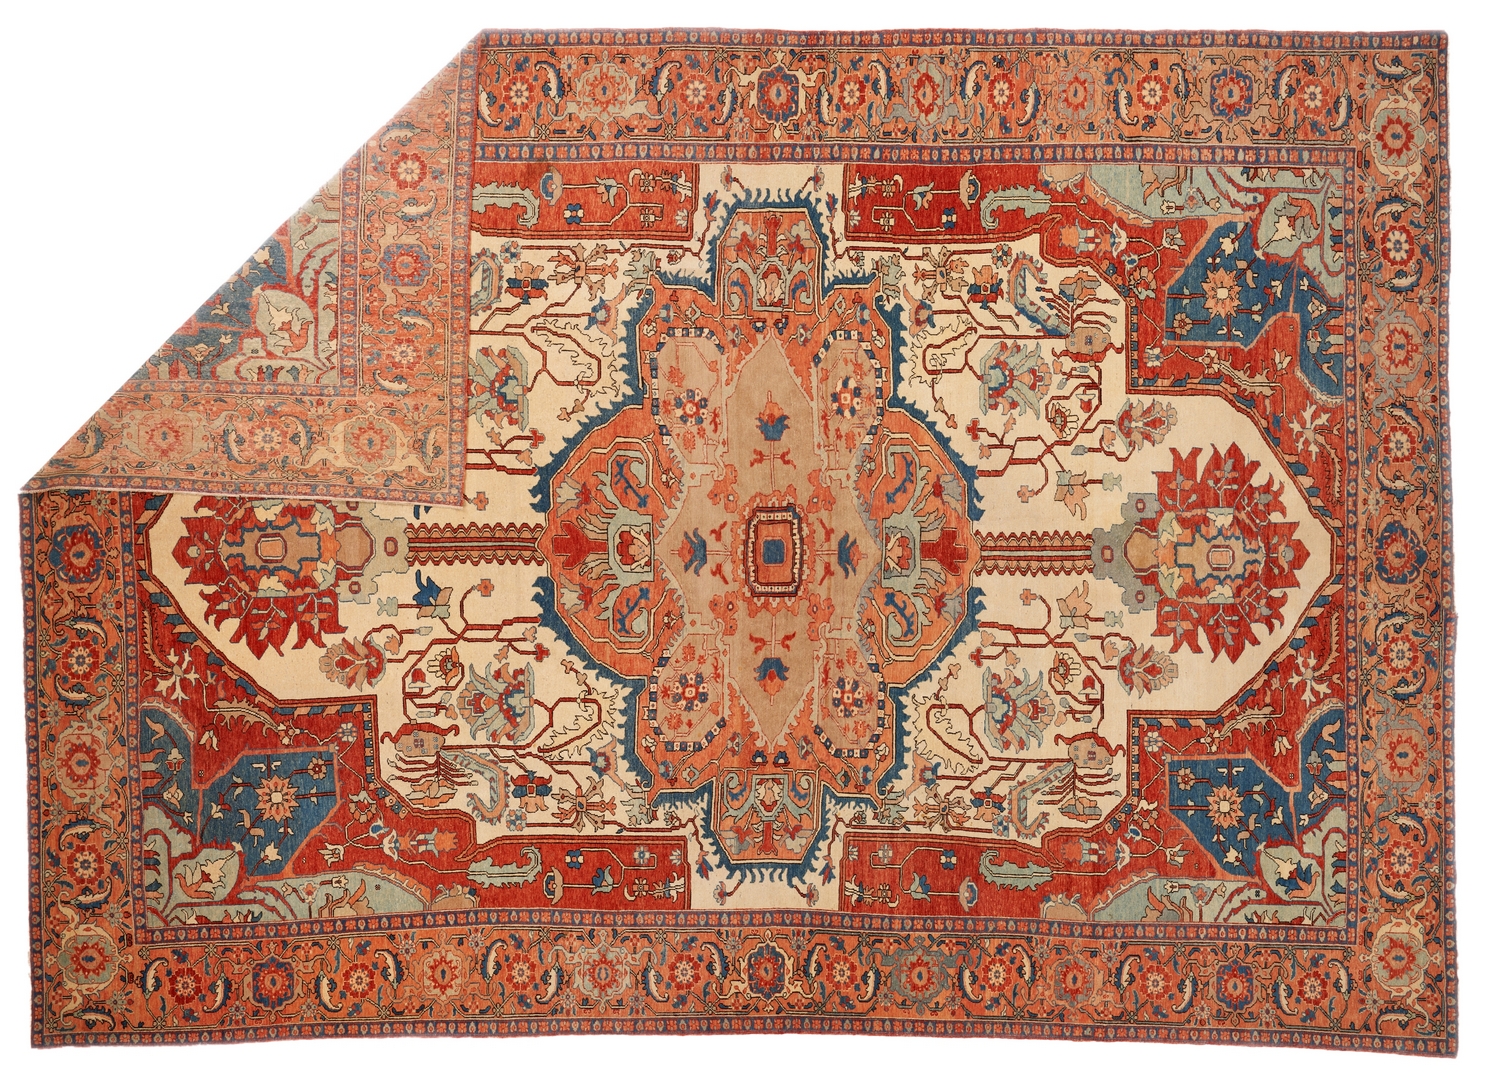 Lot 488: Large Turkish Rubia Carpet or Rug, Woven Legends